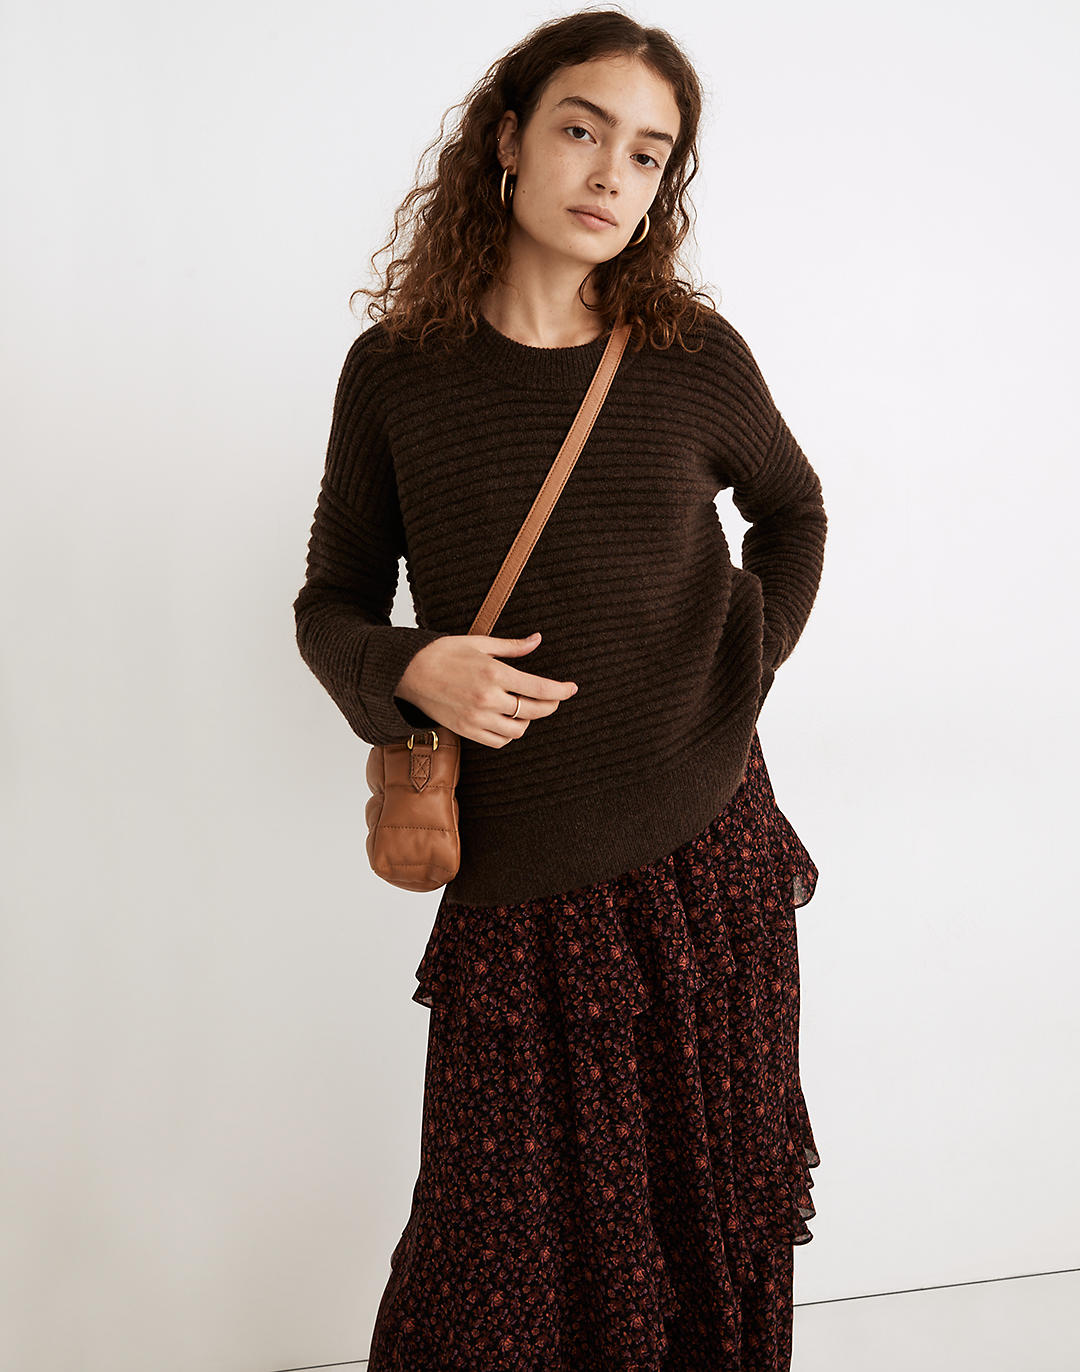 Elsmere Pullover Sweater in heather brunette image 1